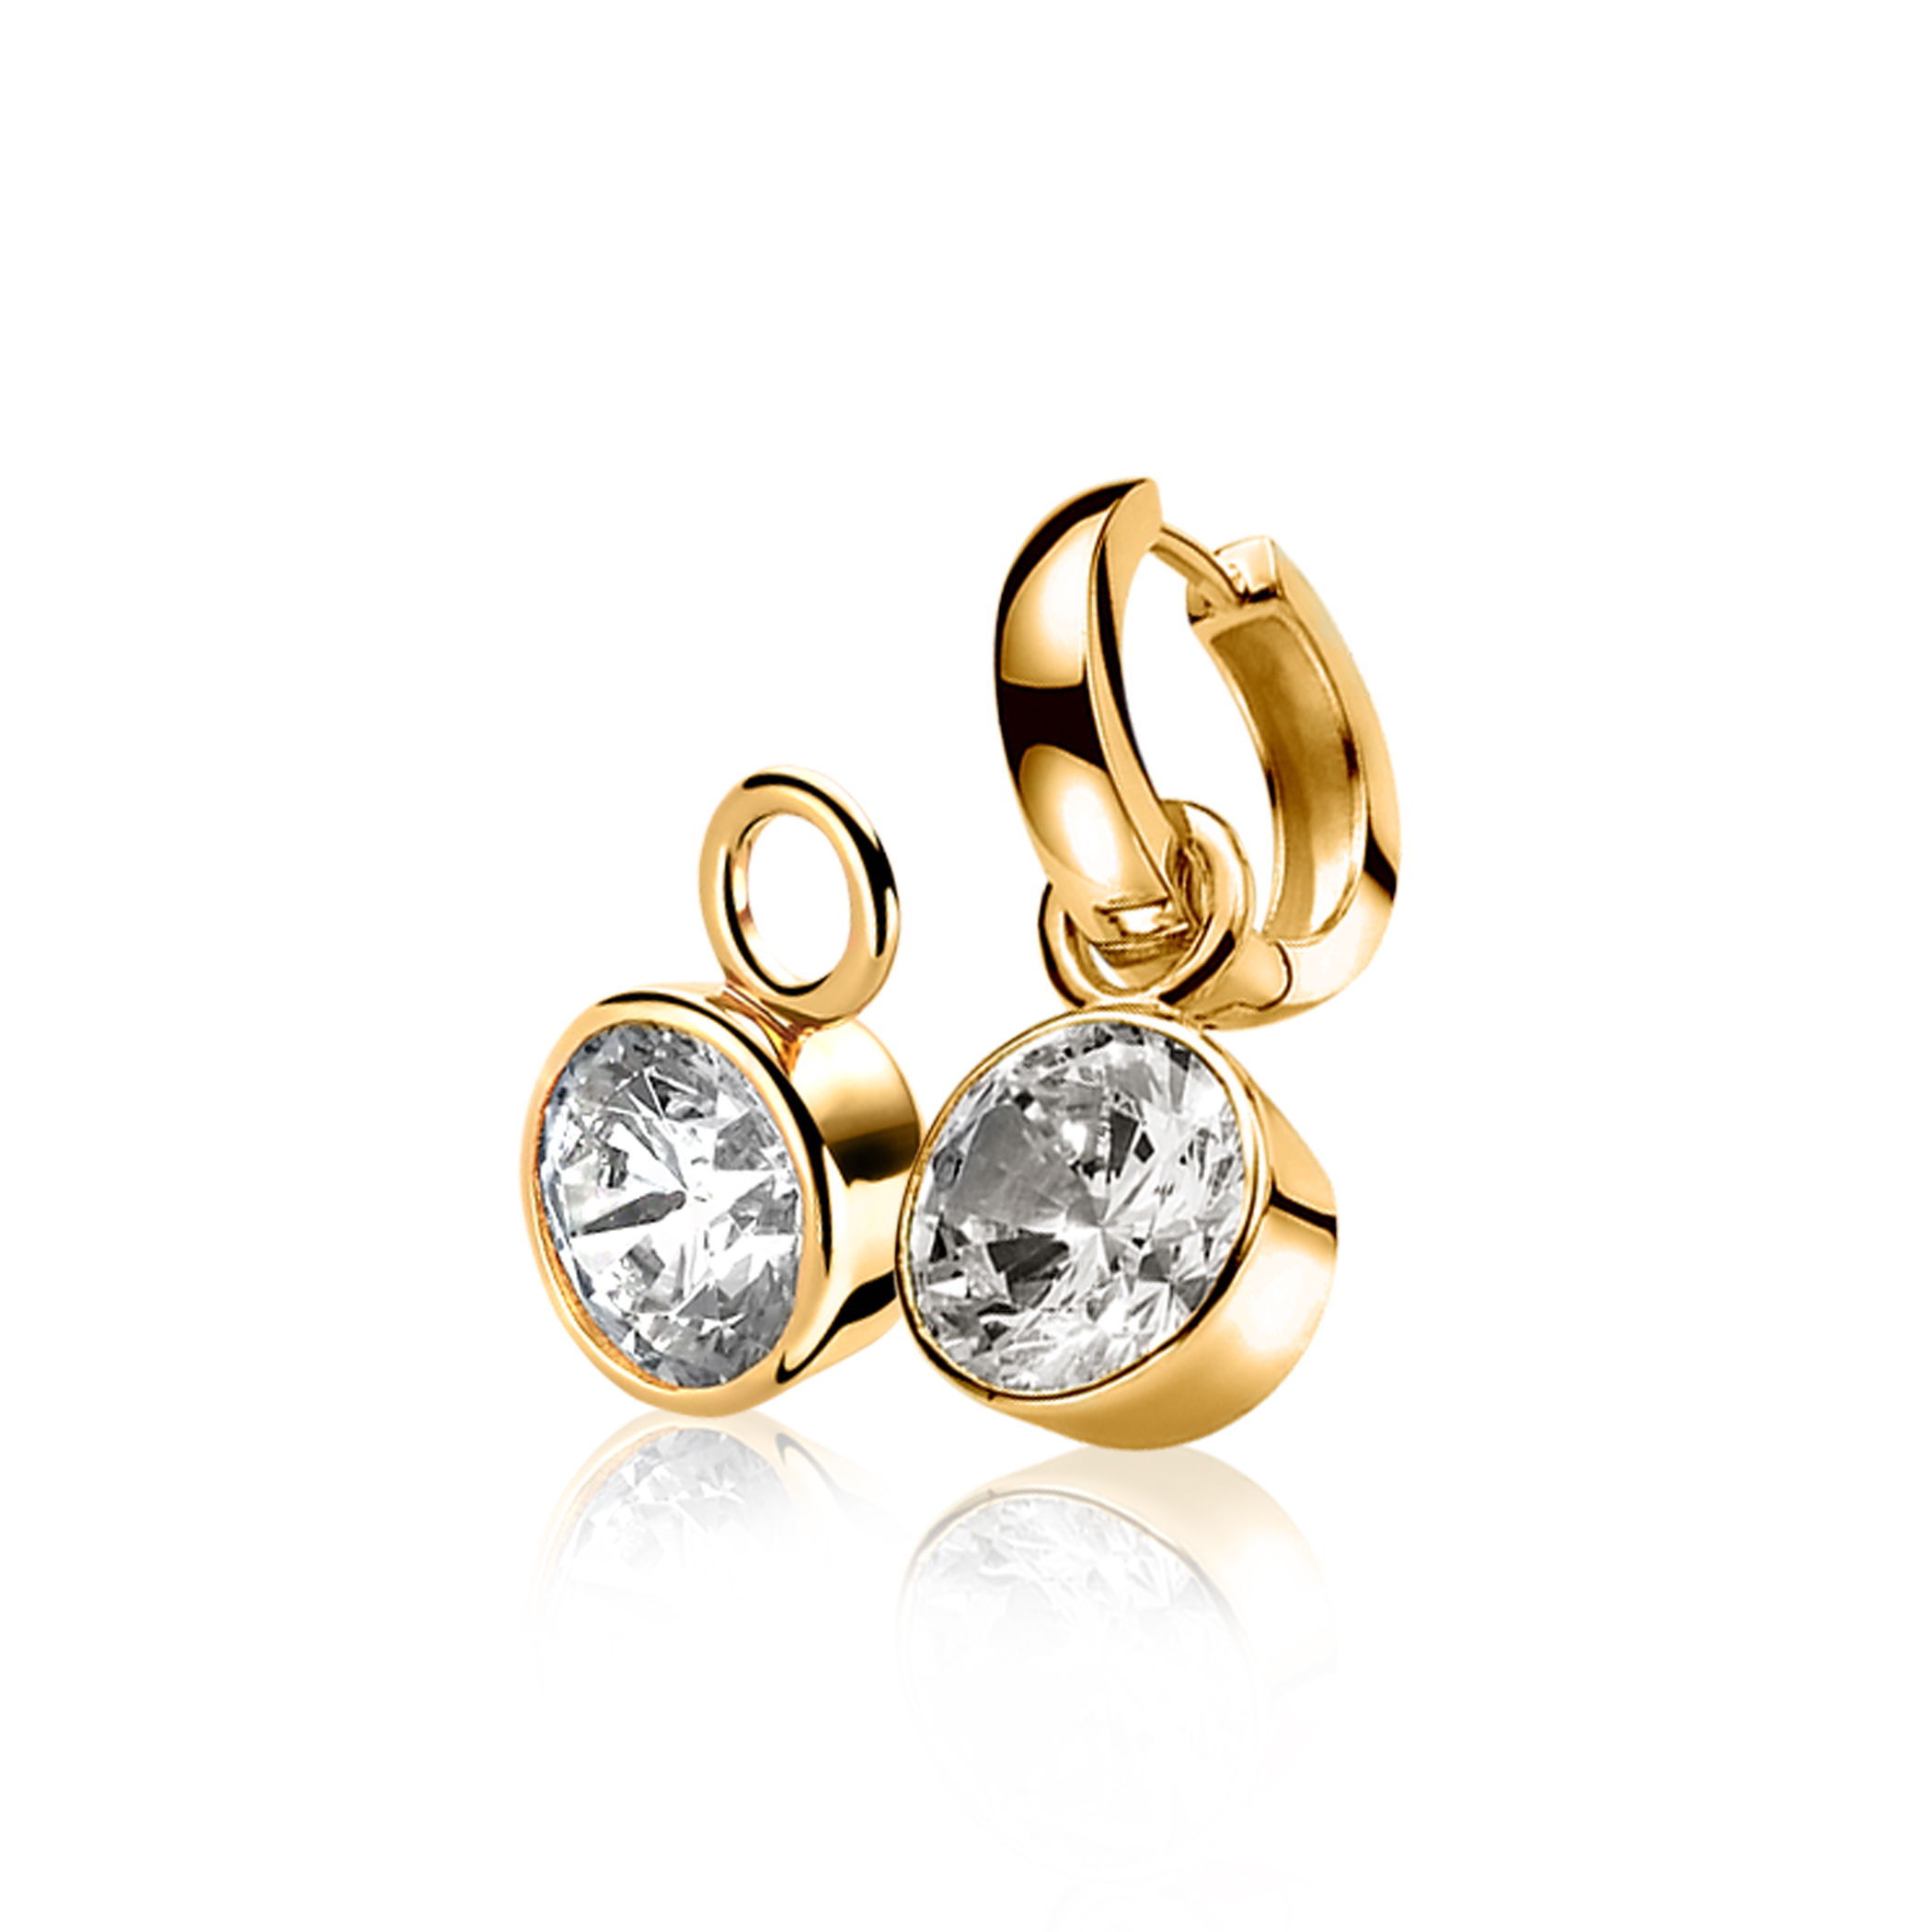 ZINZI Gold Plated Sterling Silver Earrings Pendants White ZICH186Y (excl. hoop earrings)